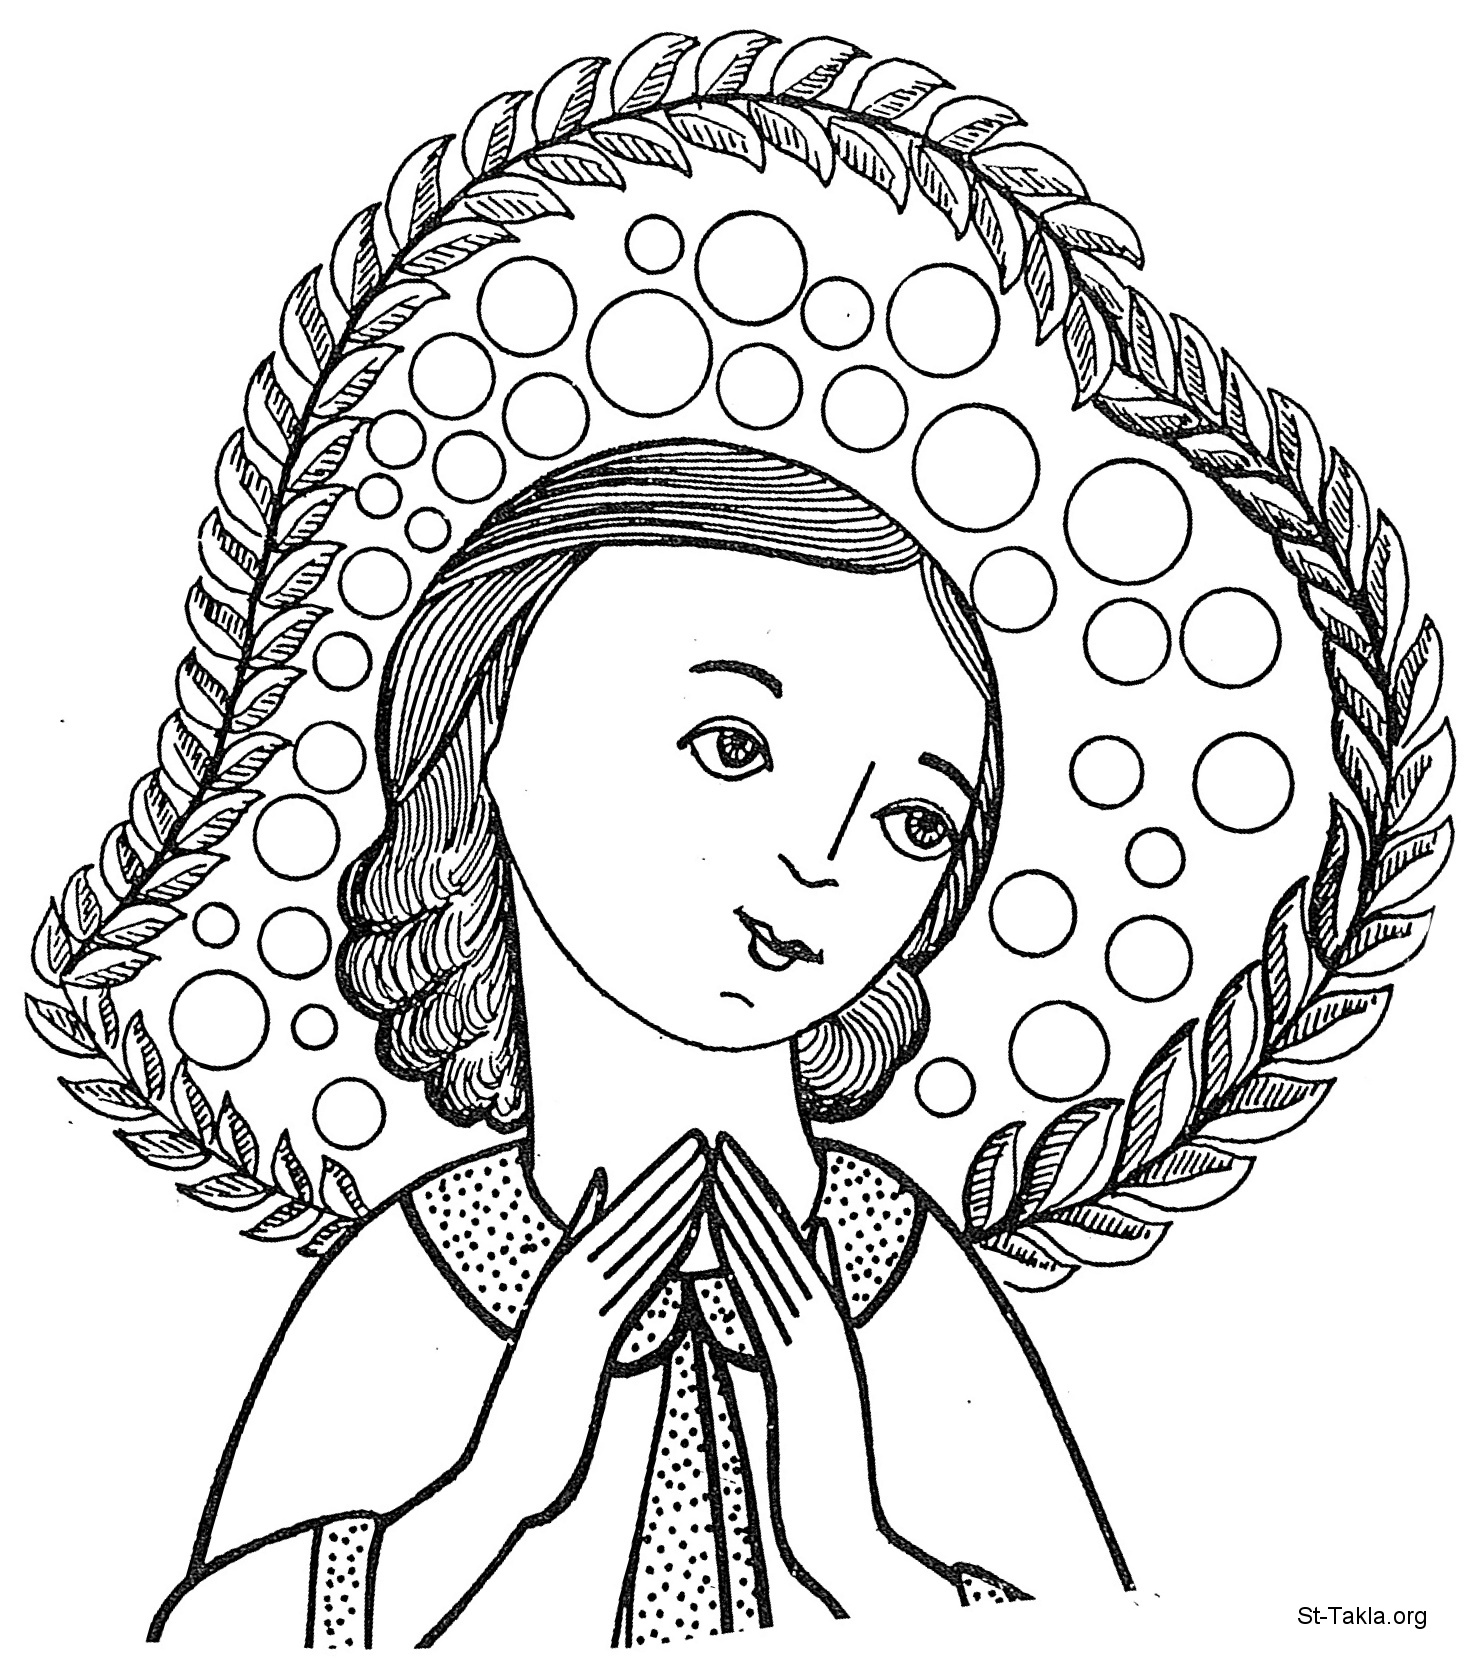 St-Takla.org Image: A girl praying, happy woman, Coptic art صورة في موقع الأنبا تكلا: فتاة تصلي، طفلة، بنت، سيدة فرحة، فن قبطي